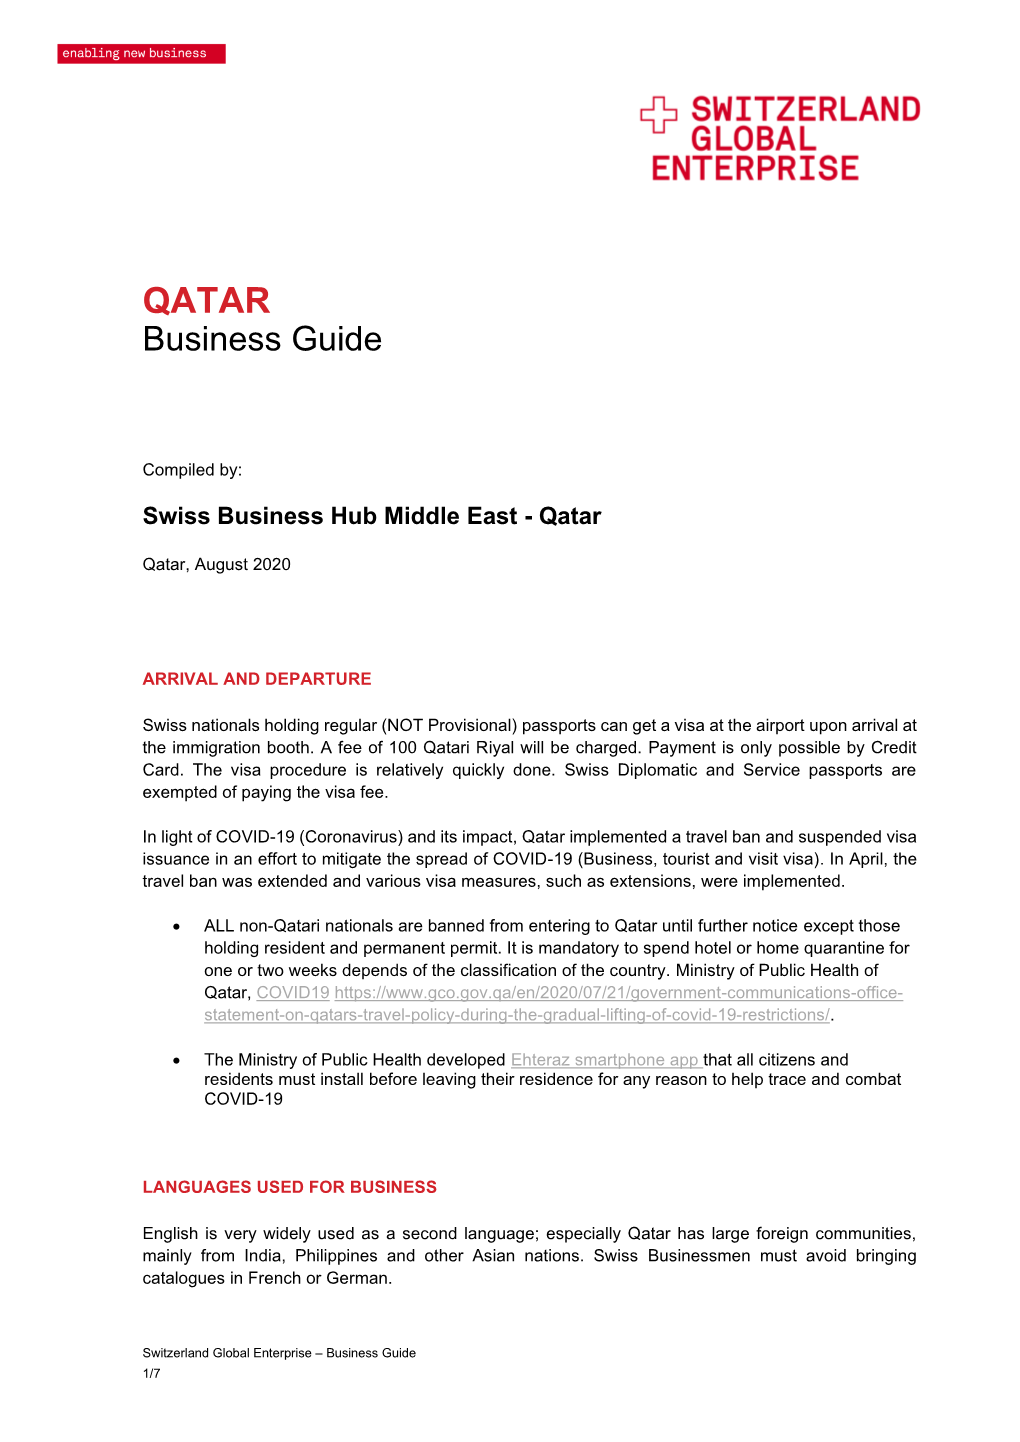 QATAR Business Guide